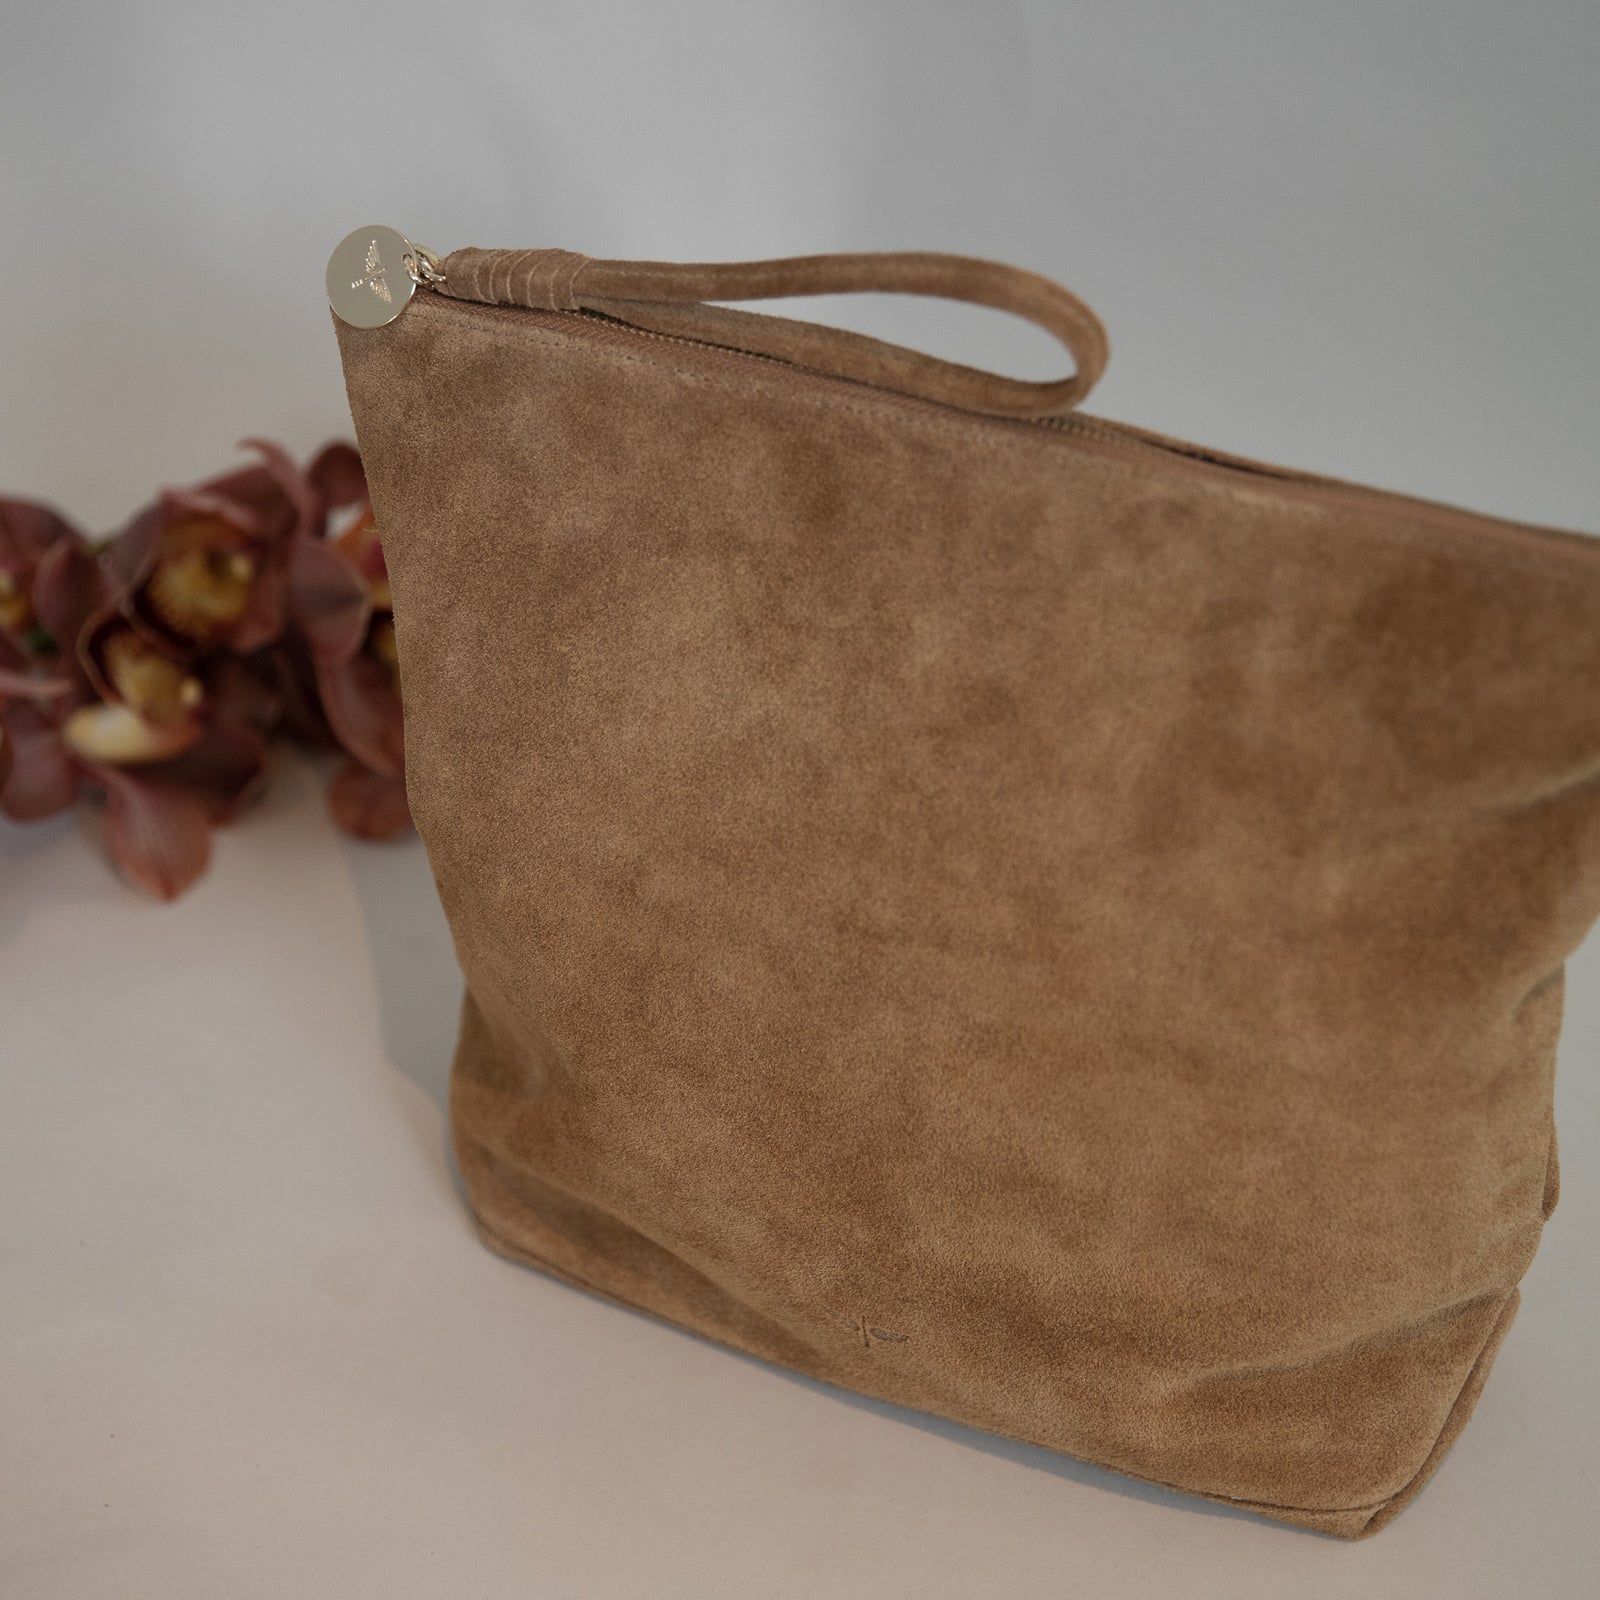 BOHO suede bag in dark camel BROWN. Soft genuine leather bag. Dark bro –  Handmade suede bags by Good Times Barcelona